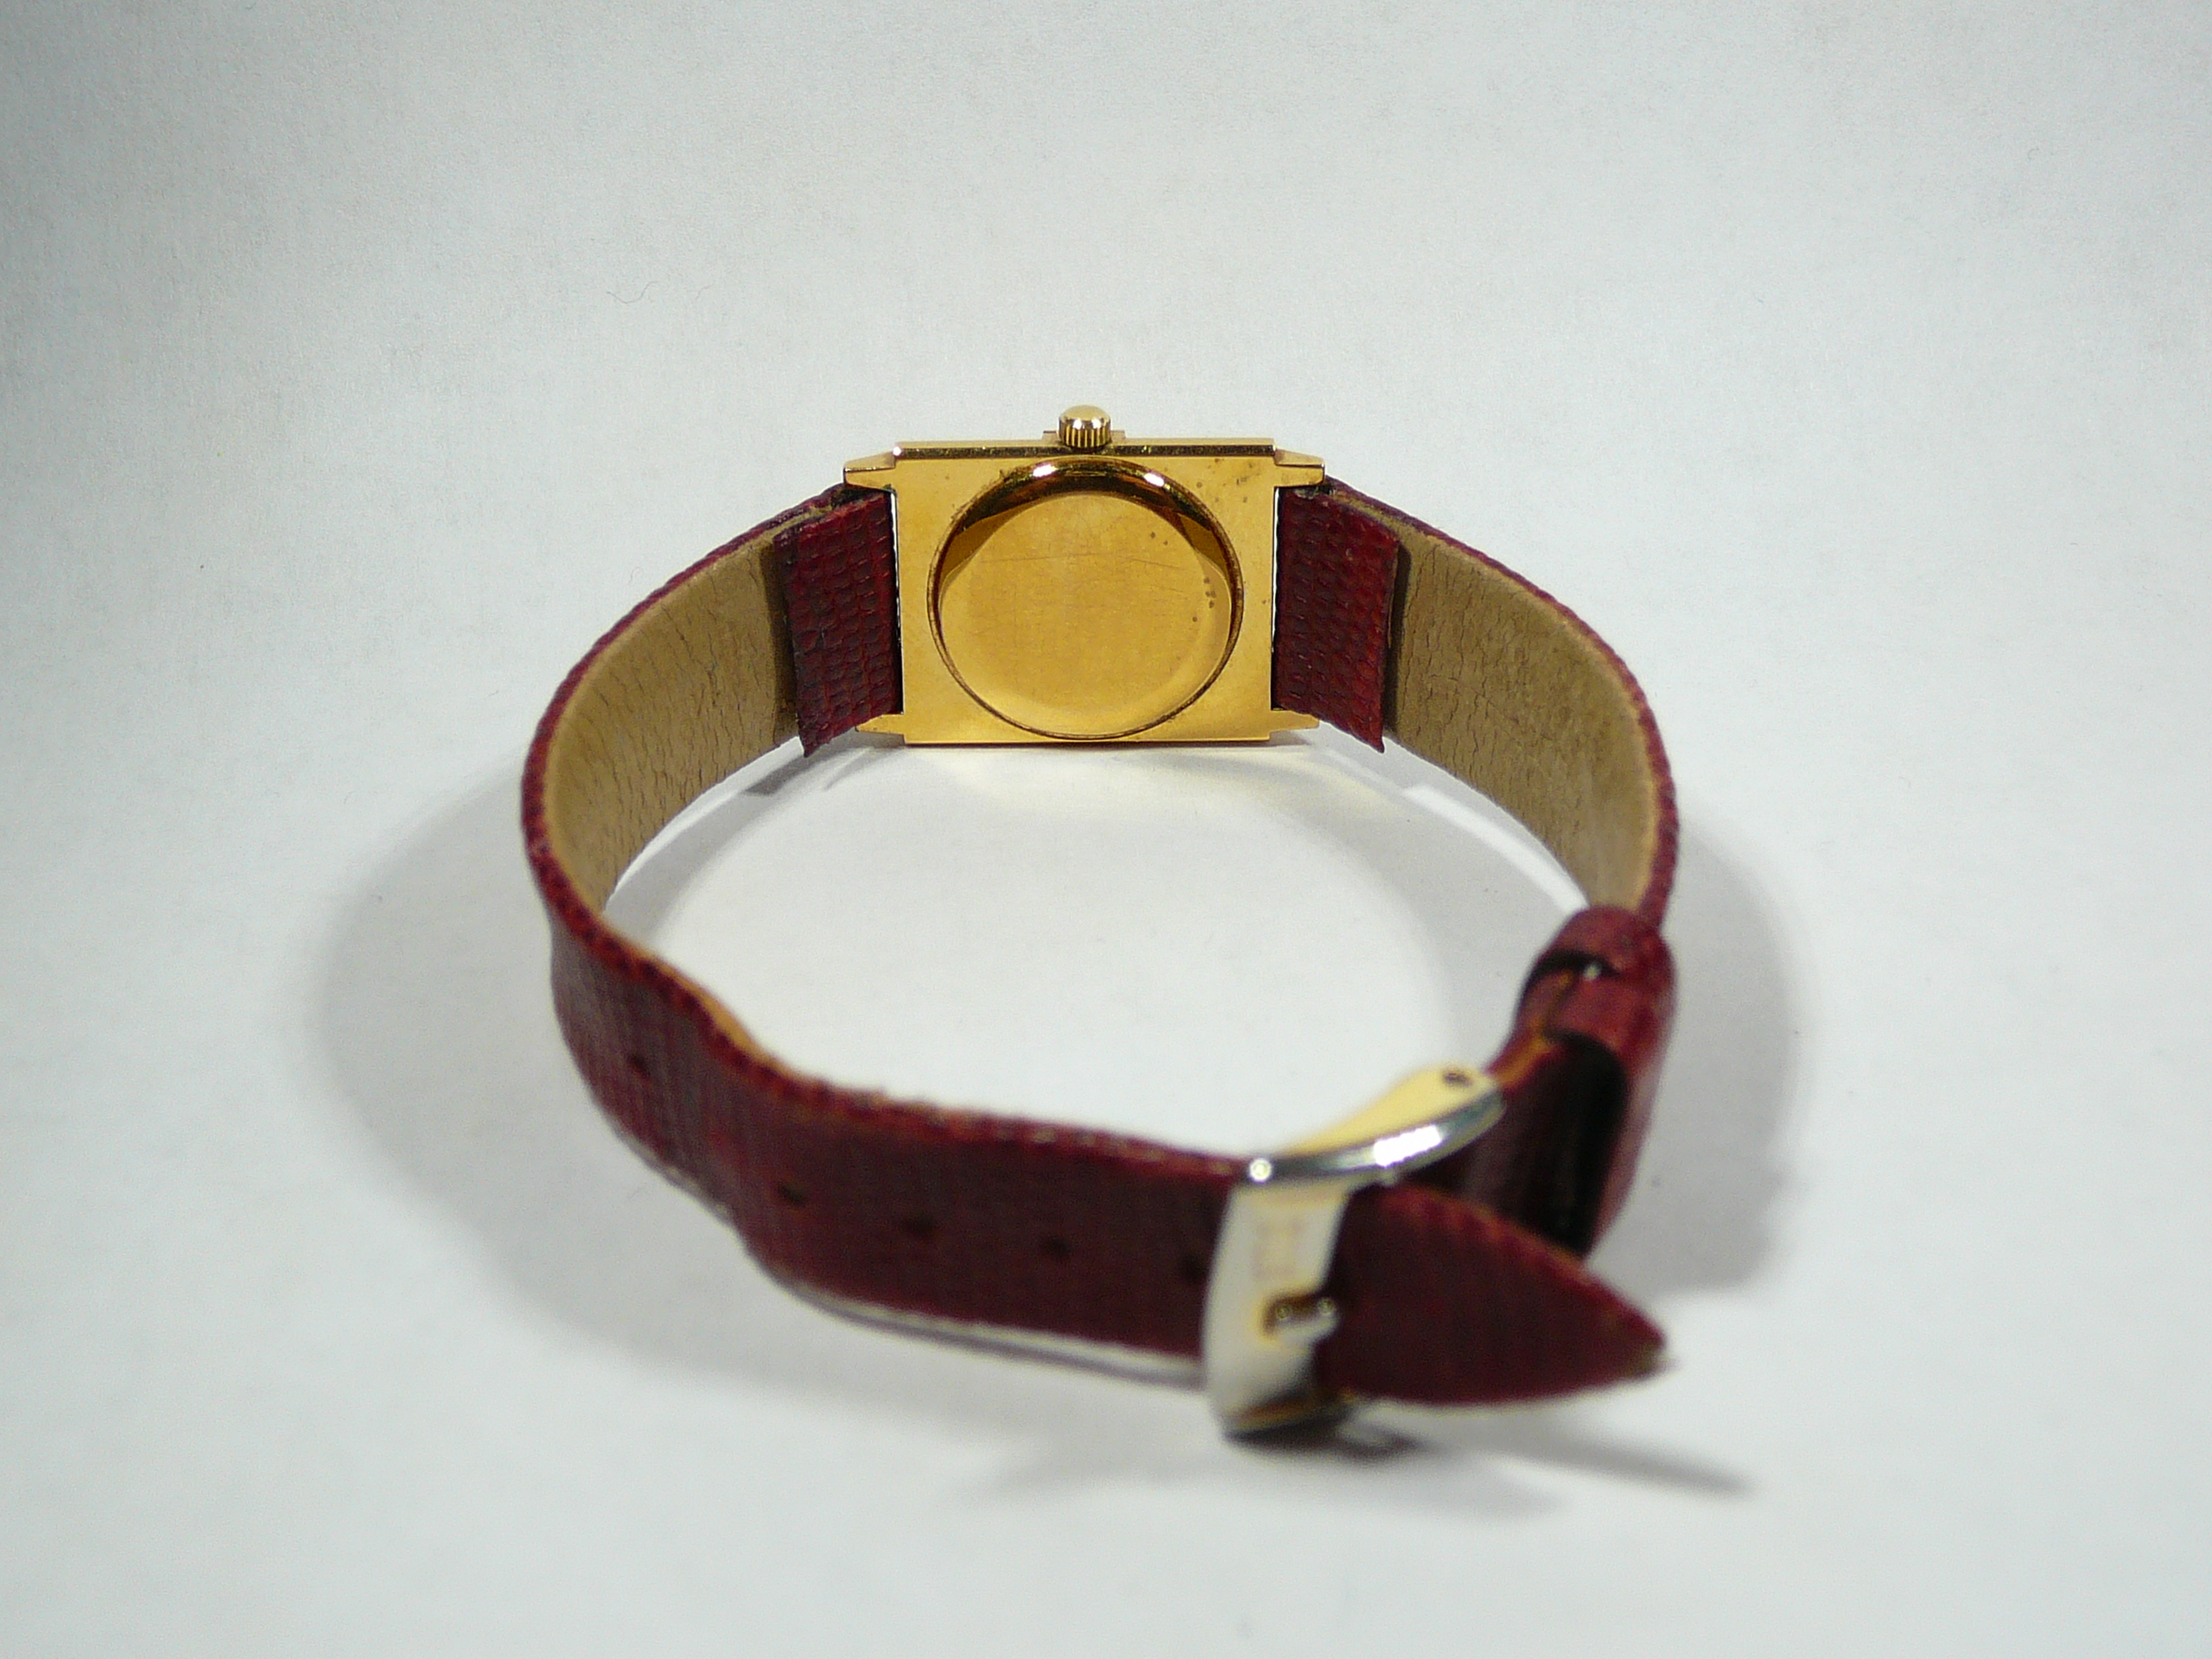 Ladies Raymond Weil Wrist Watch - Image 3 of 3